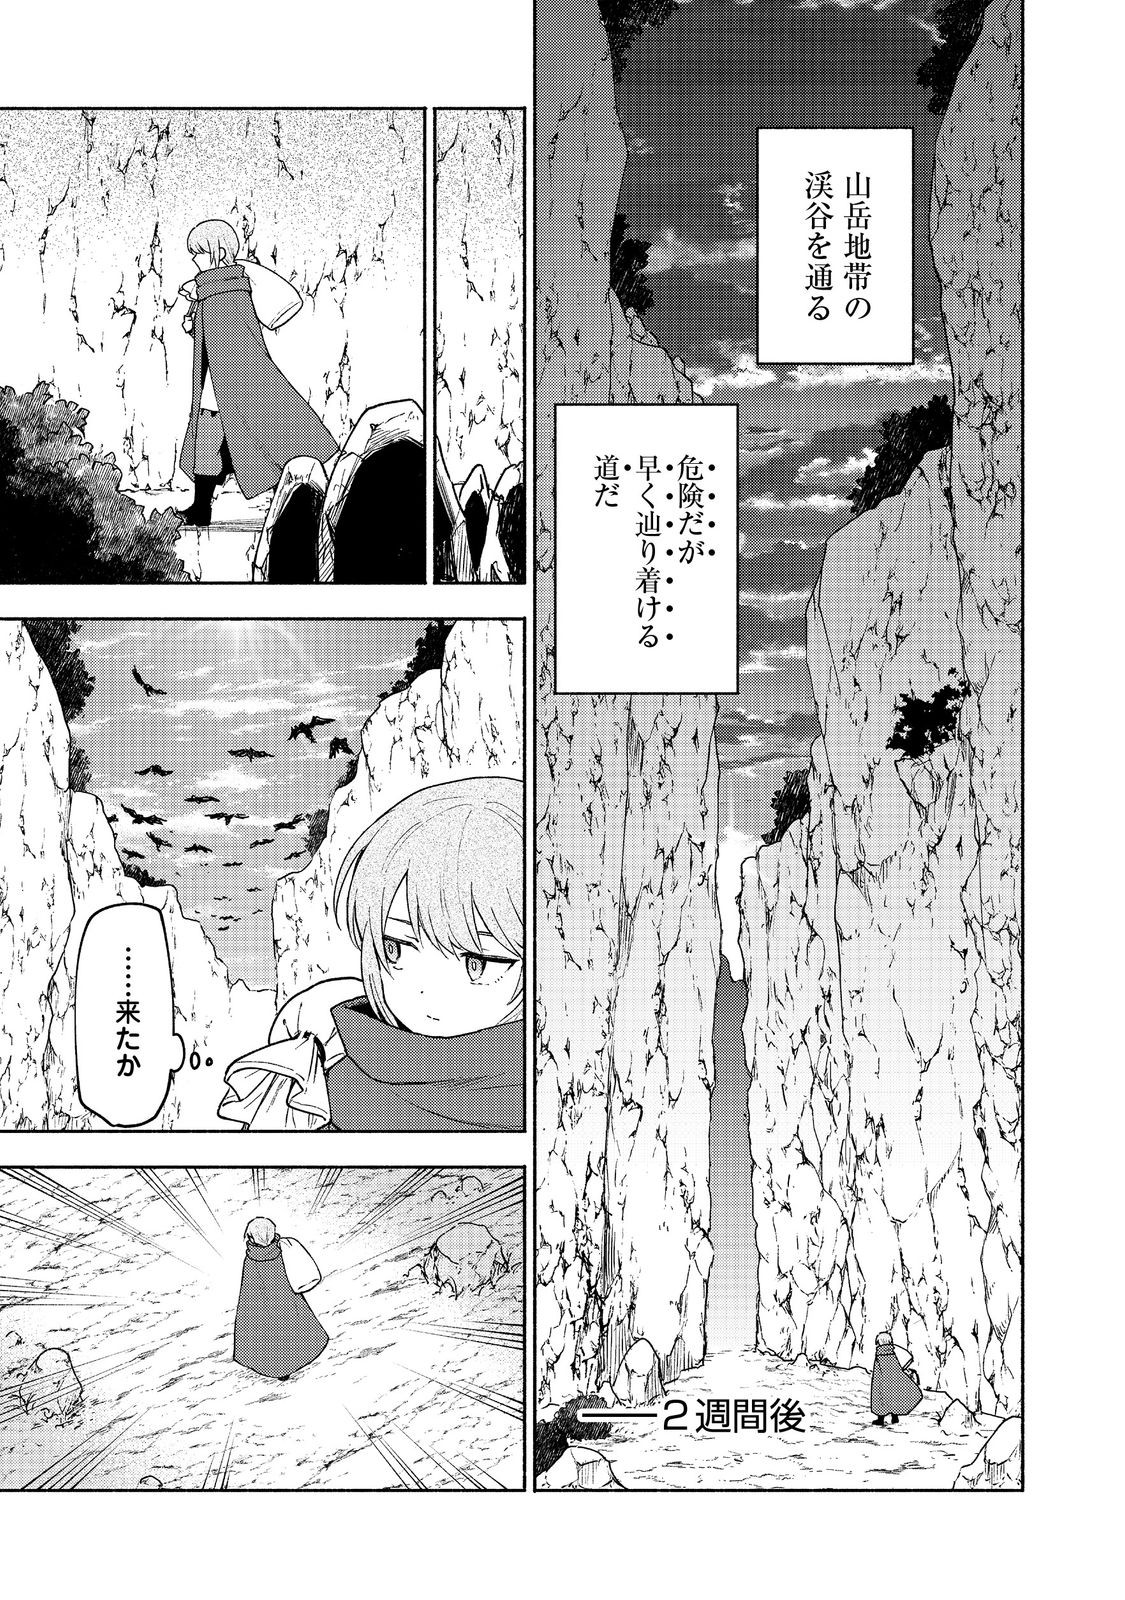 Otome Game no Heroine de Saikyou Survival - Chapter 21 - Page 3